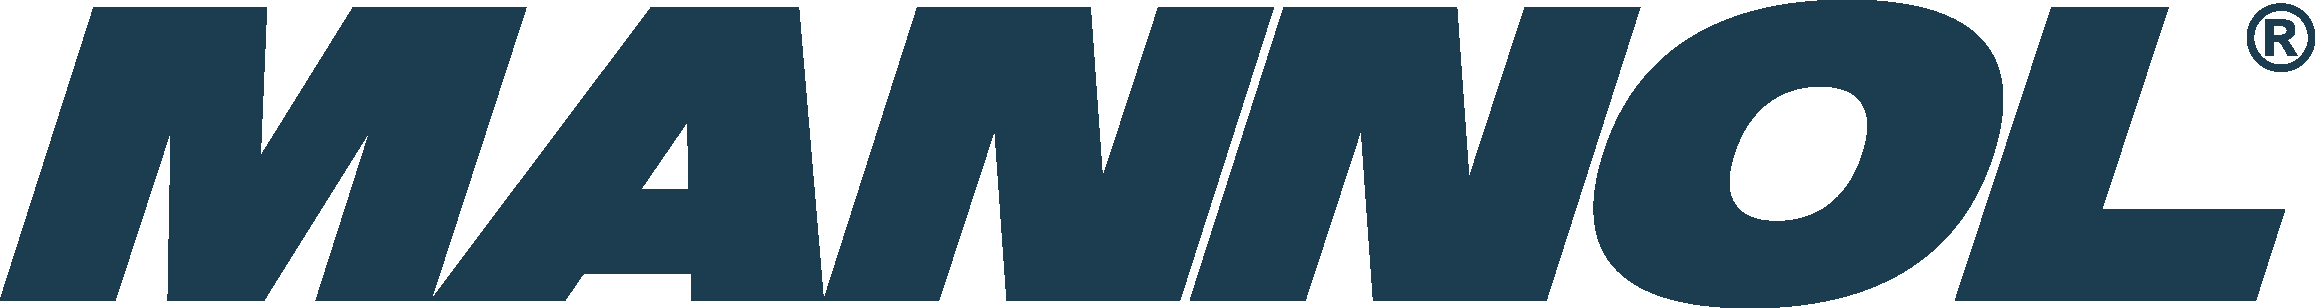 mannol-logo